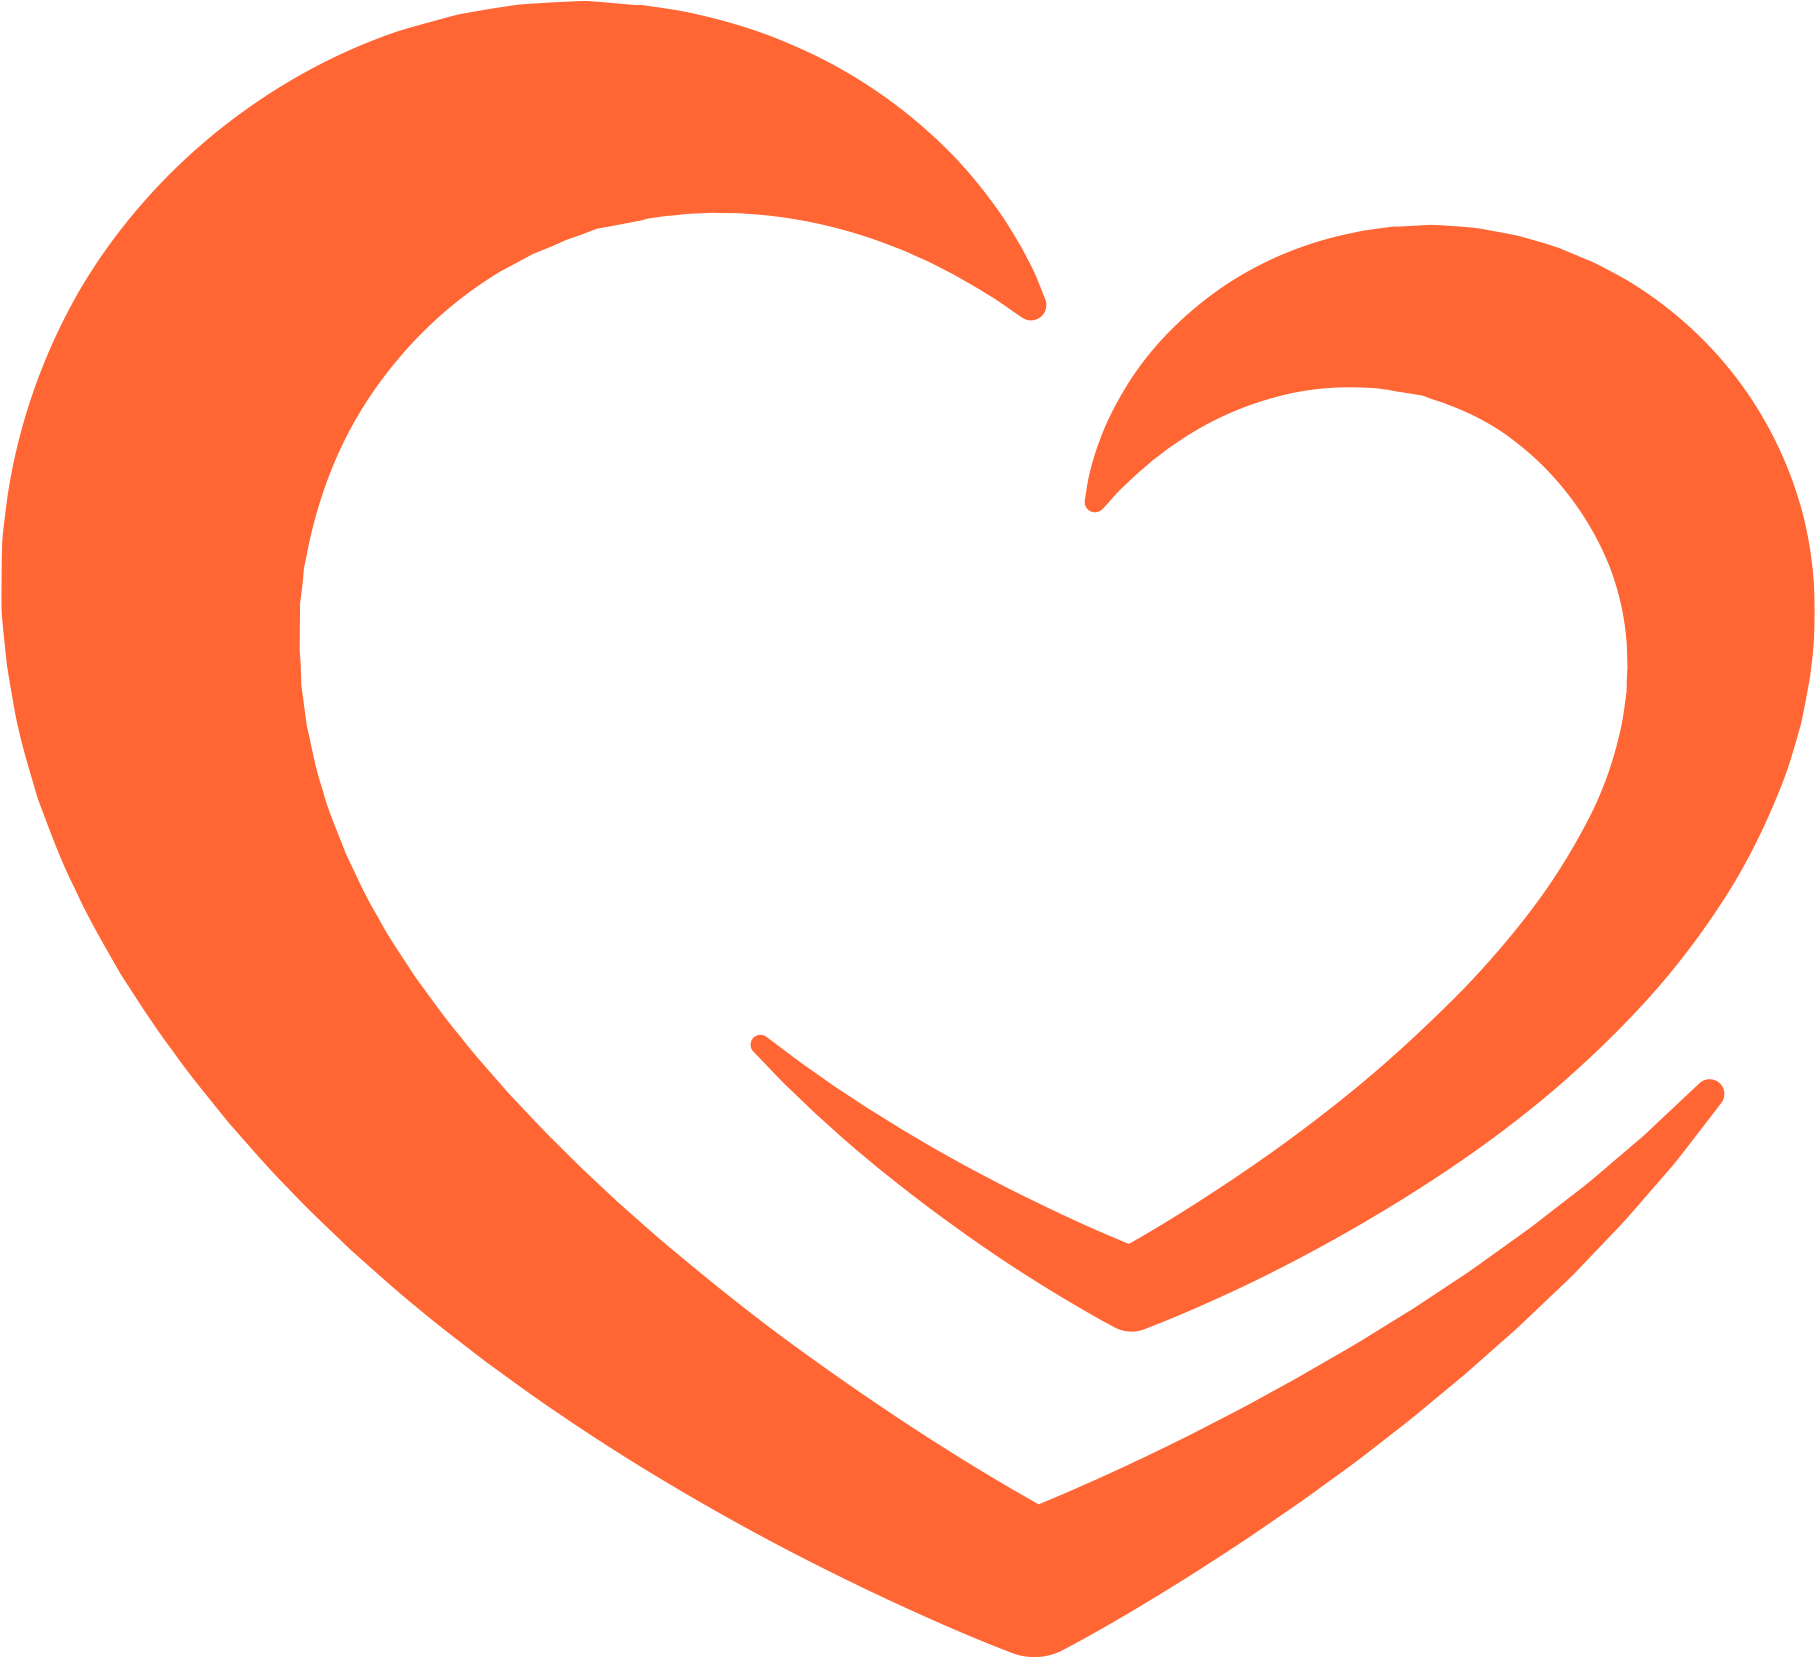 Carelinx "hugging Heart" Logo - Caring Symbol (2000x2000)